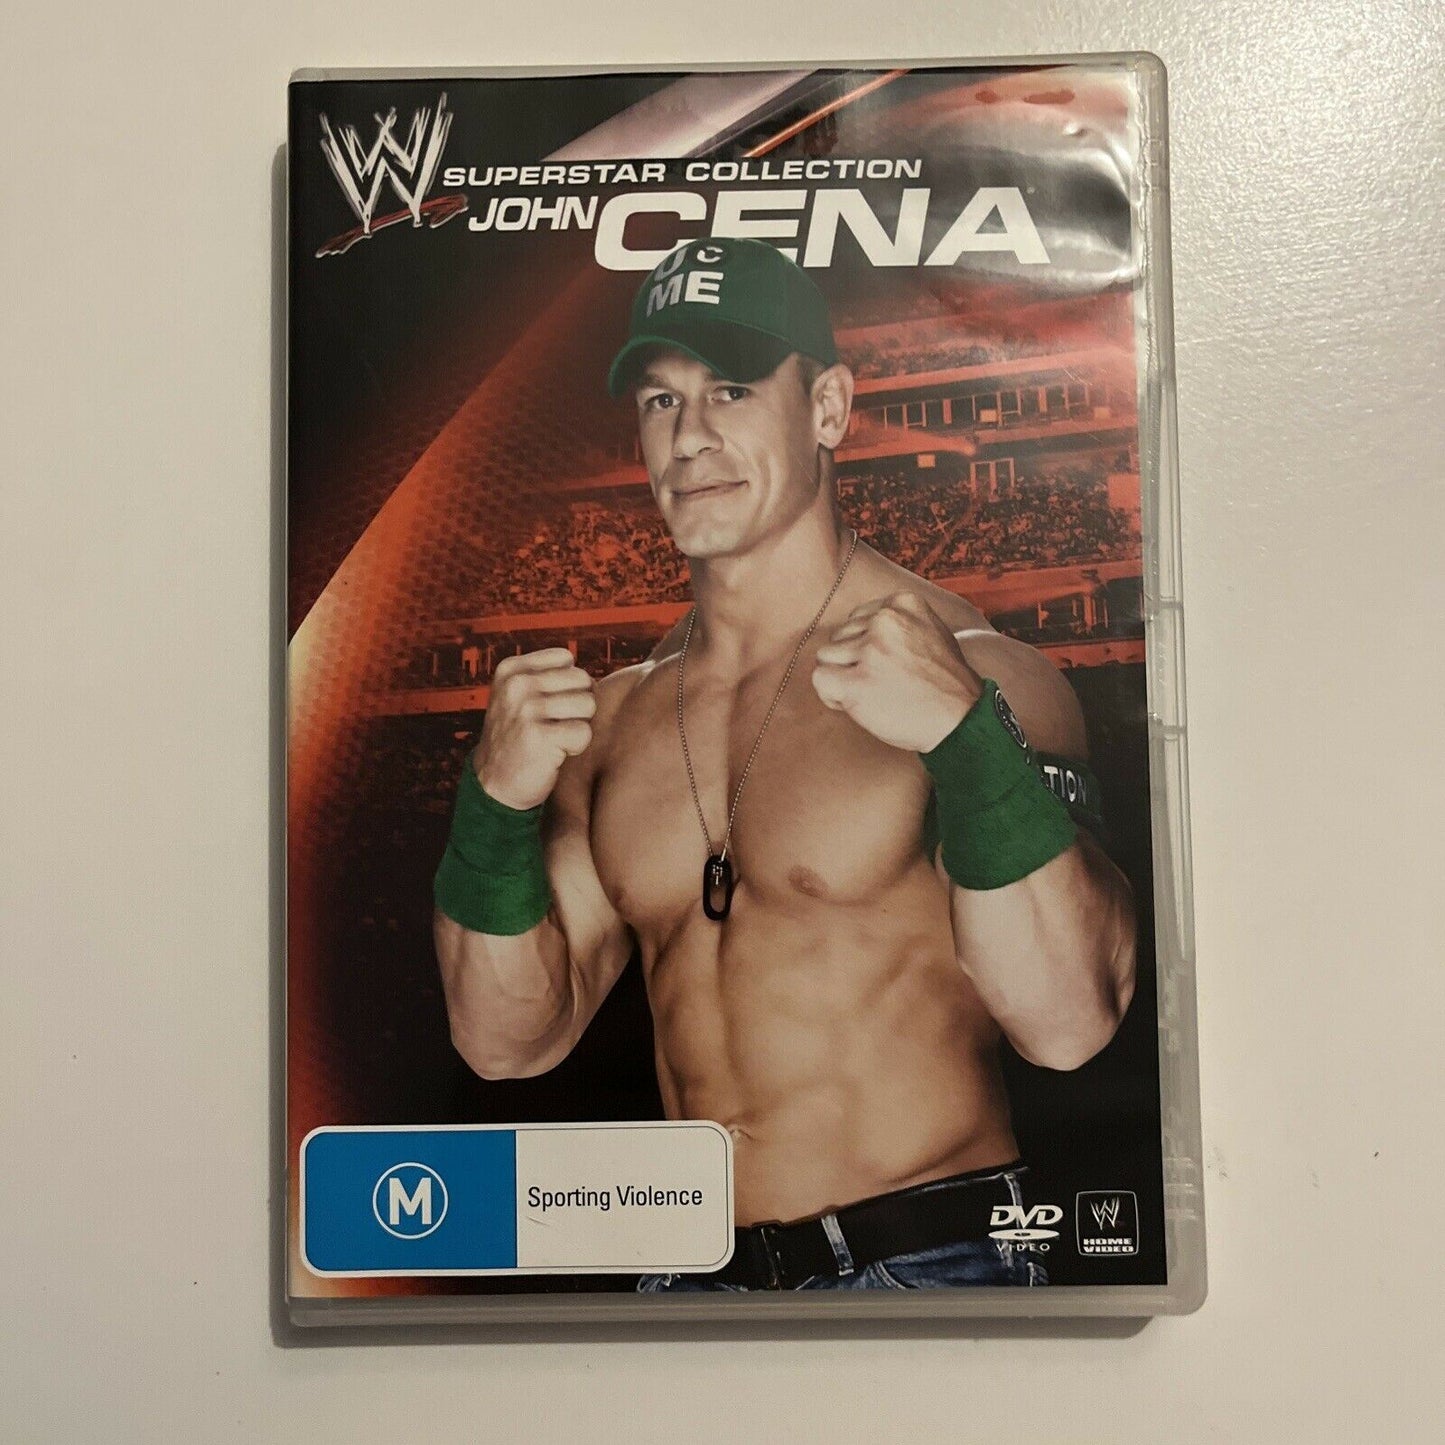 WWE - Superstar Collection - John Cena (DVD, 2012) Region 4